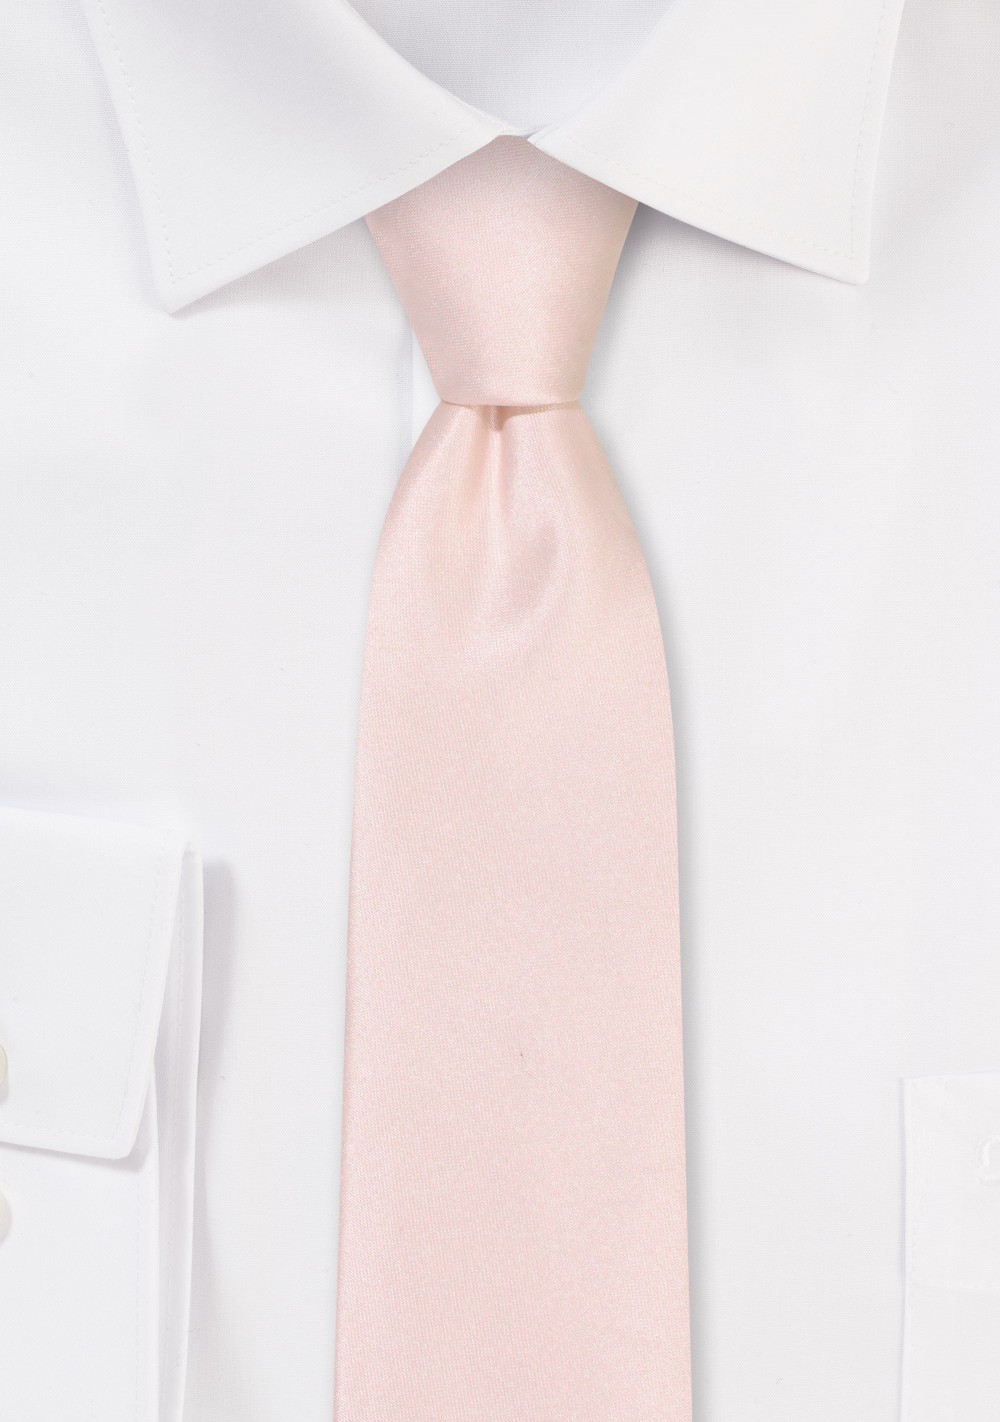 Solid Satin Skinny Tie in Antique Blush